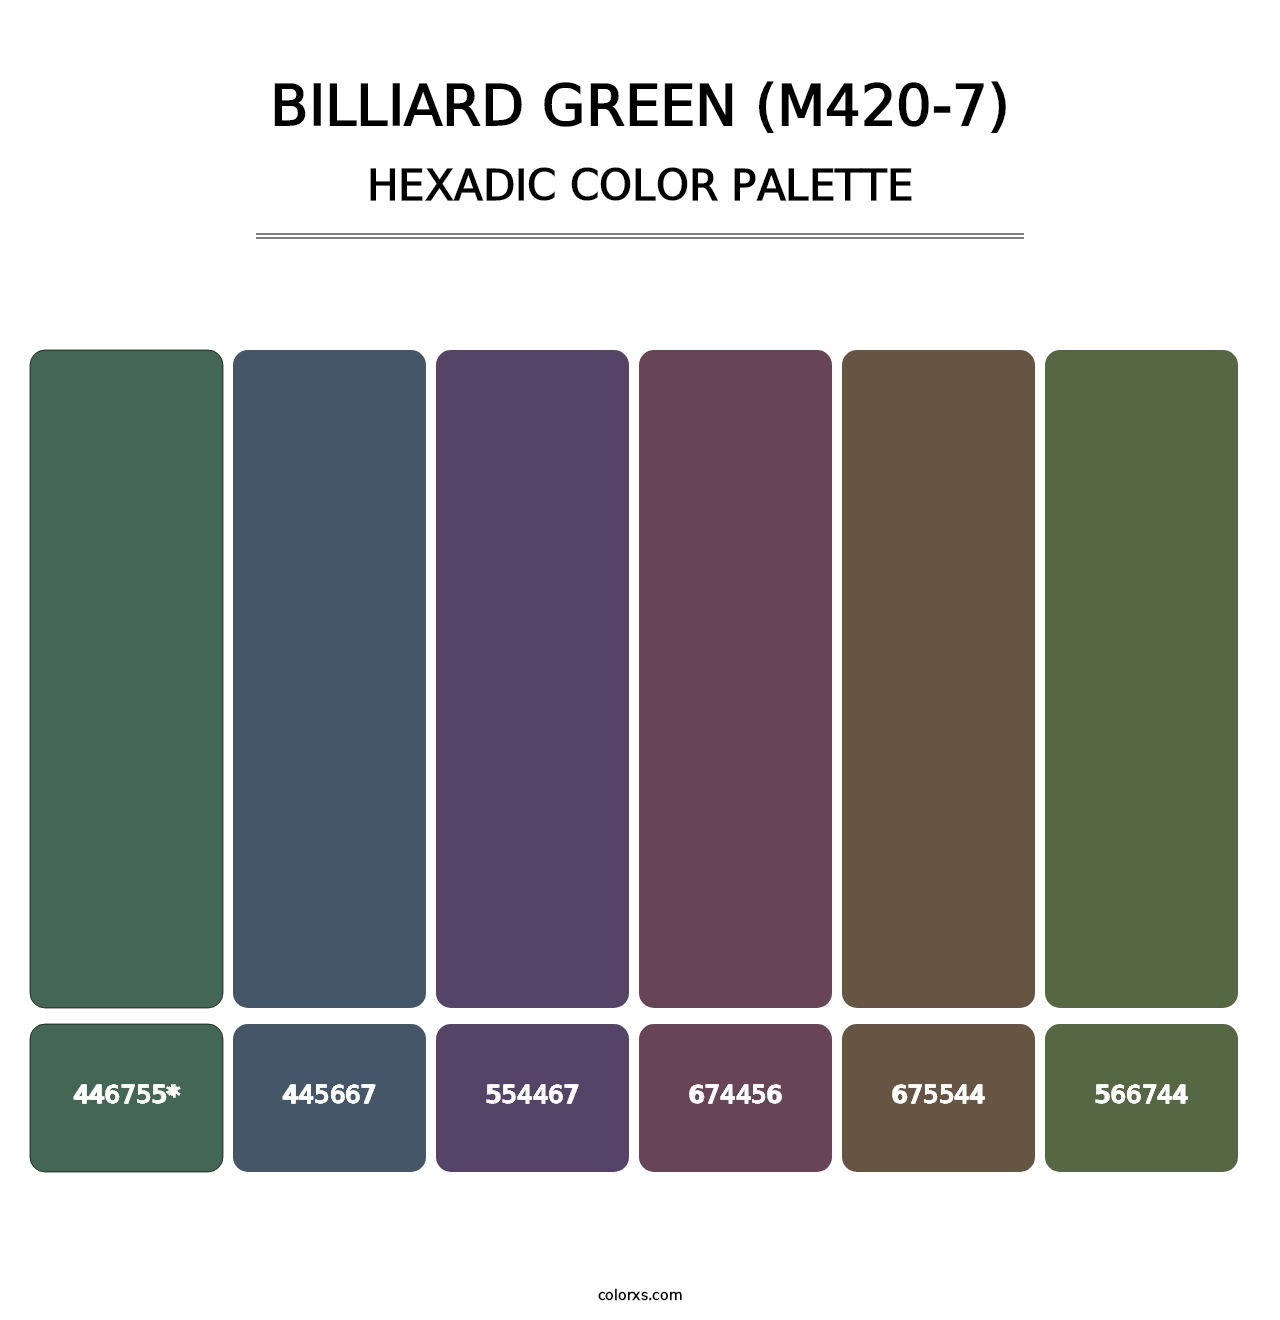 Billiard Green (M420-7) - Hexadic Color Palette